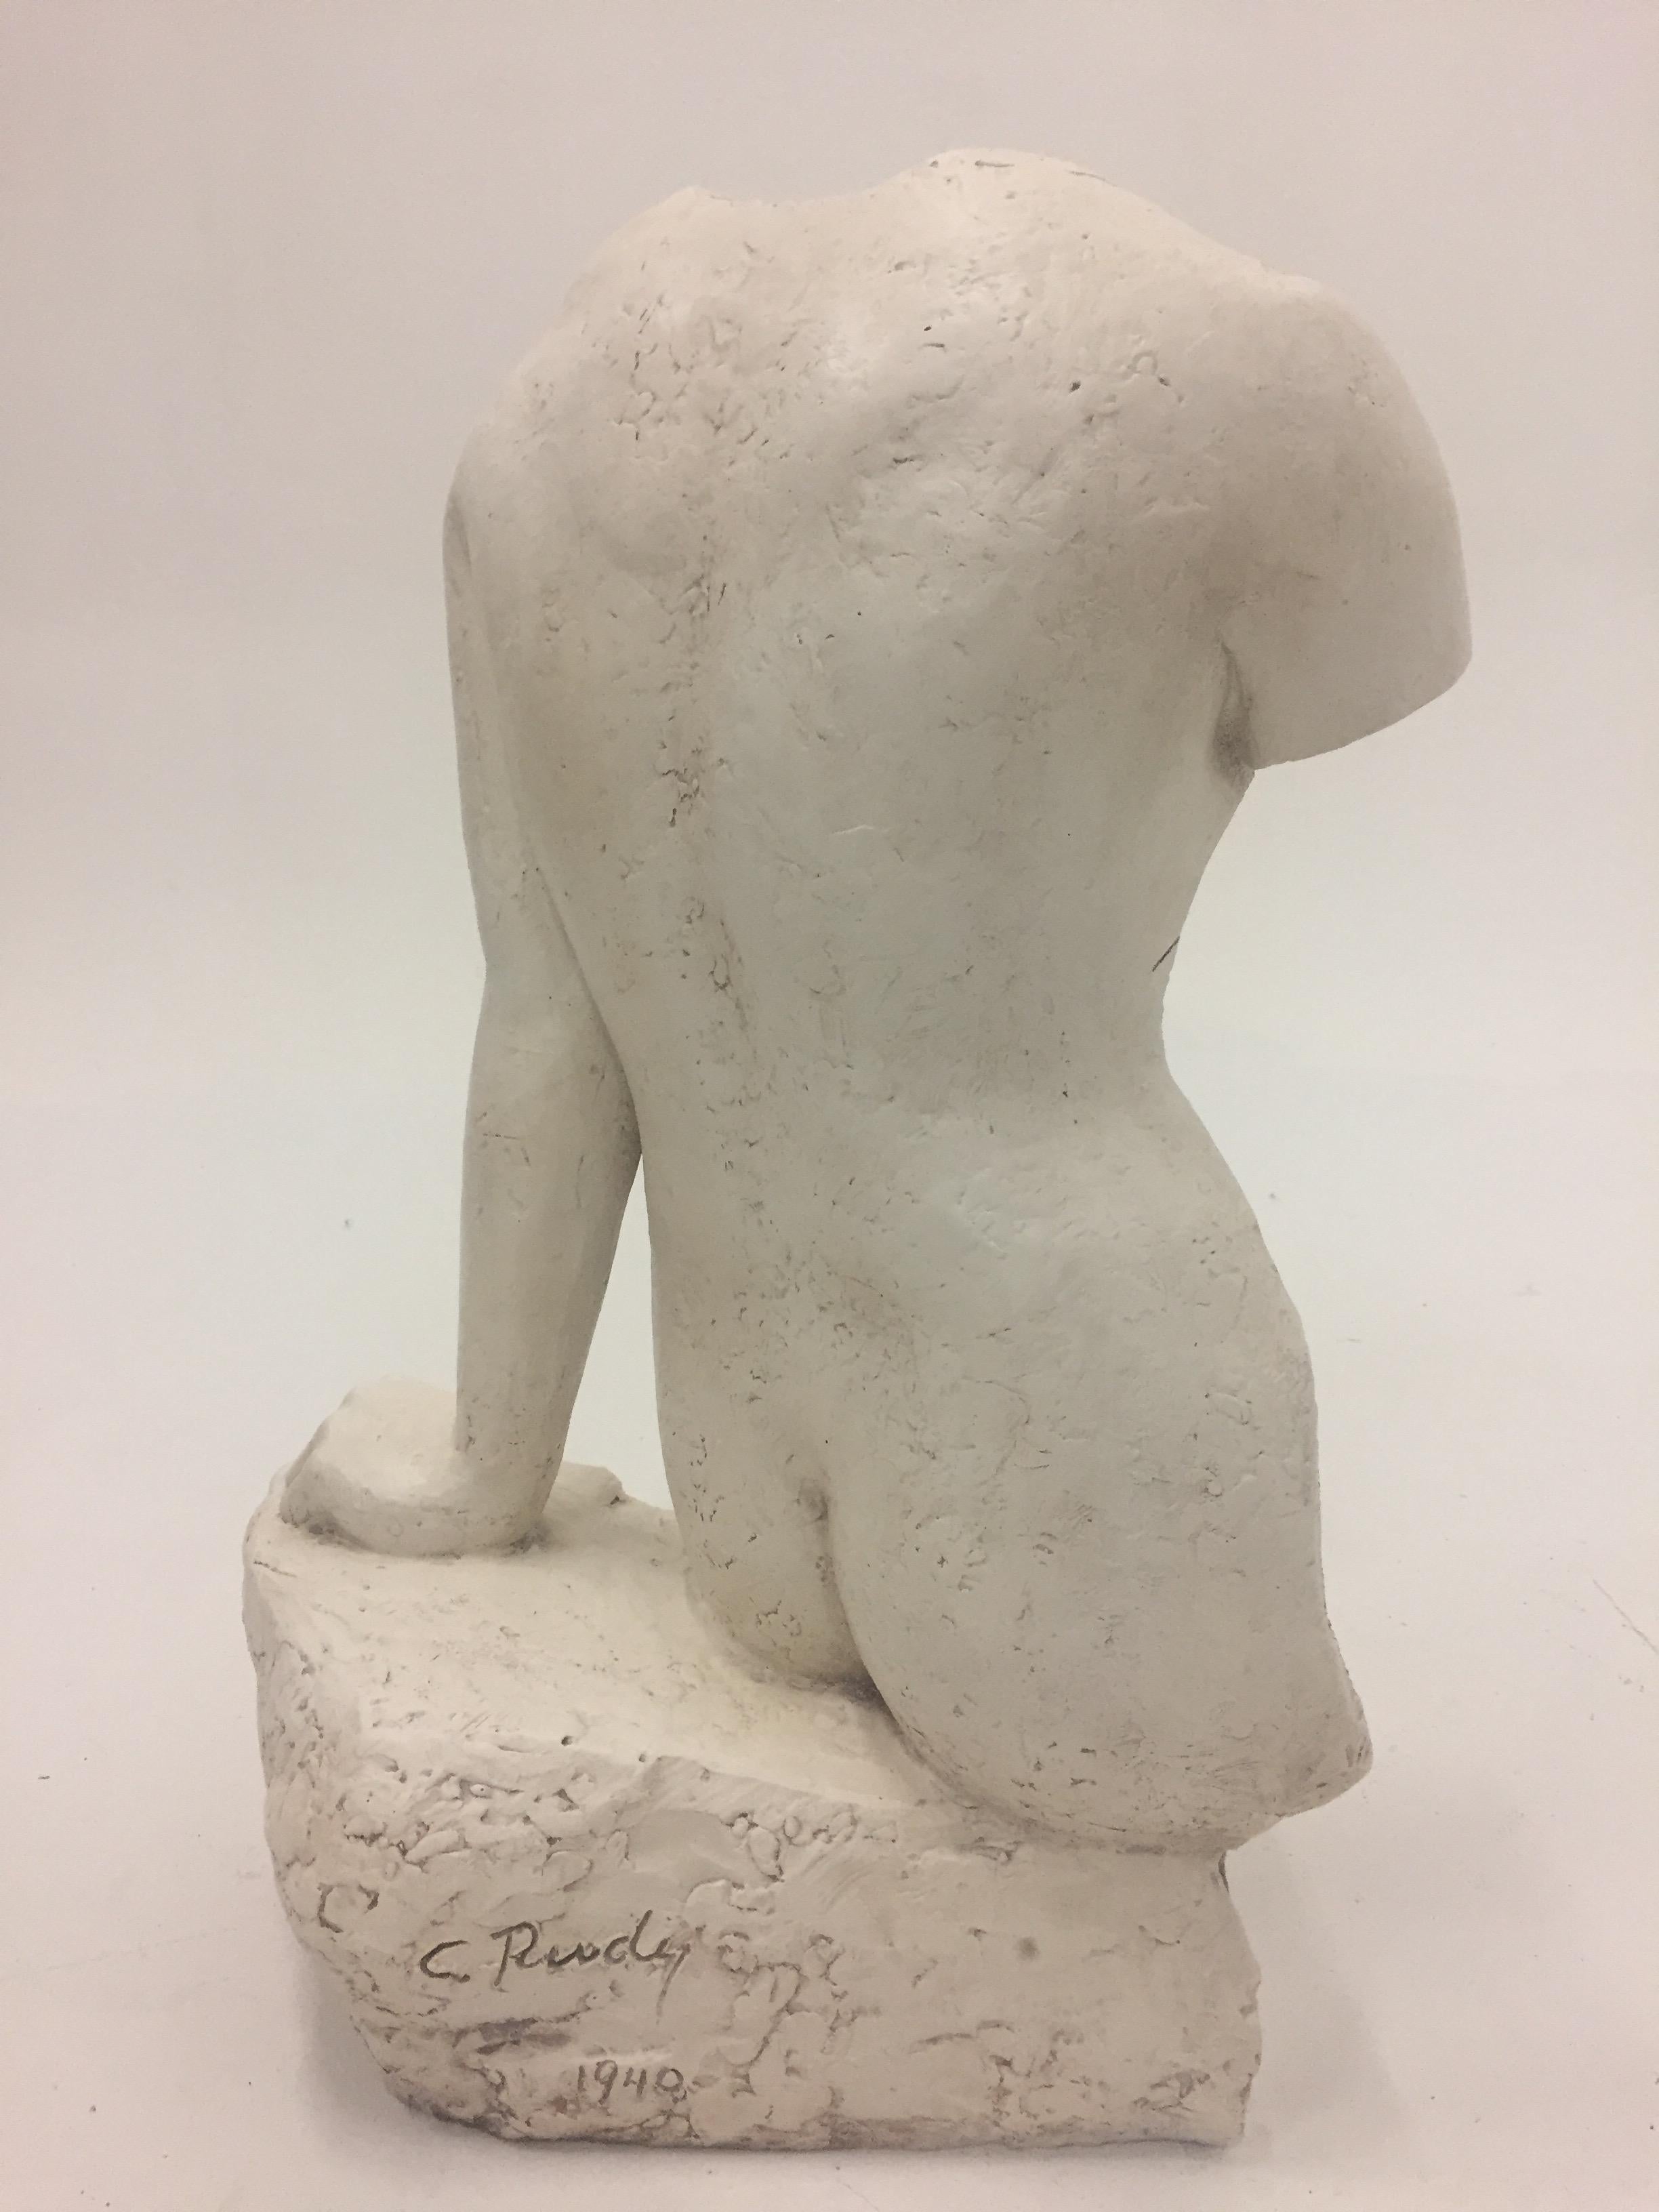 Sensual Nude Torso Sculpture by Charles Rudy 1